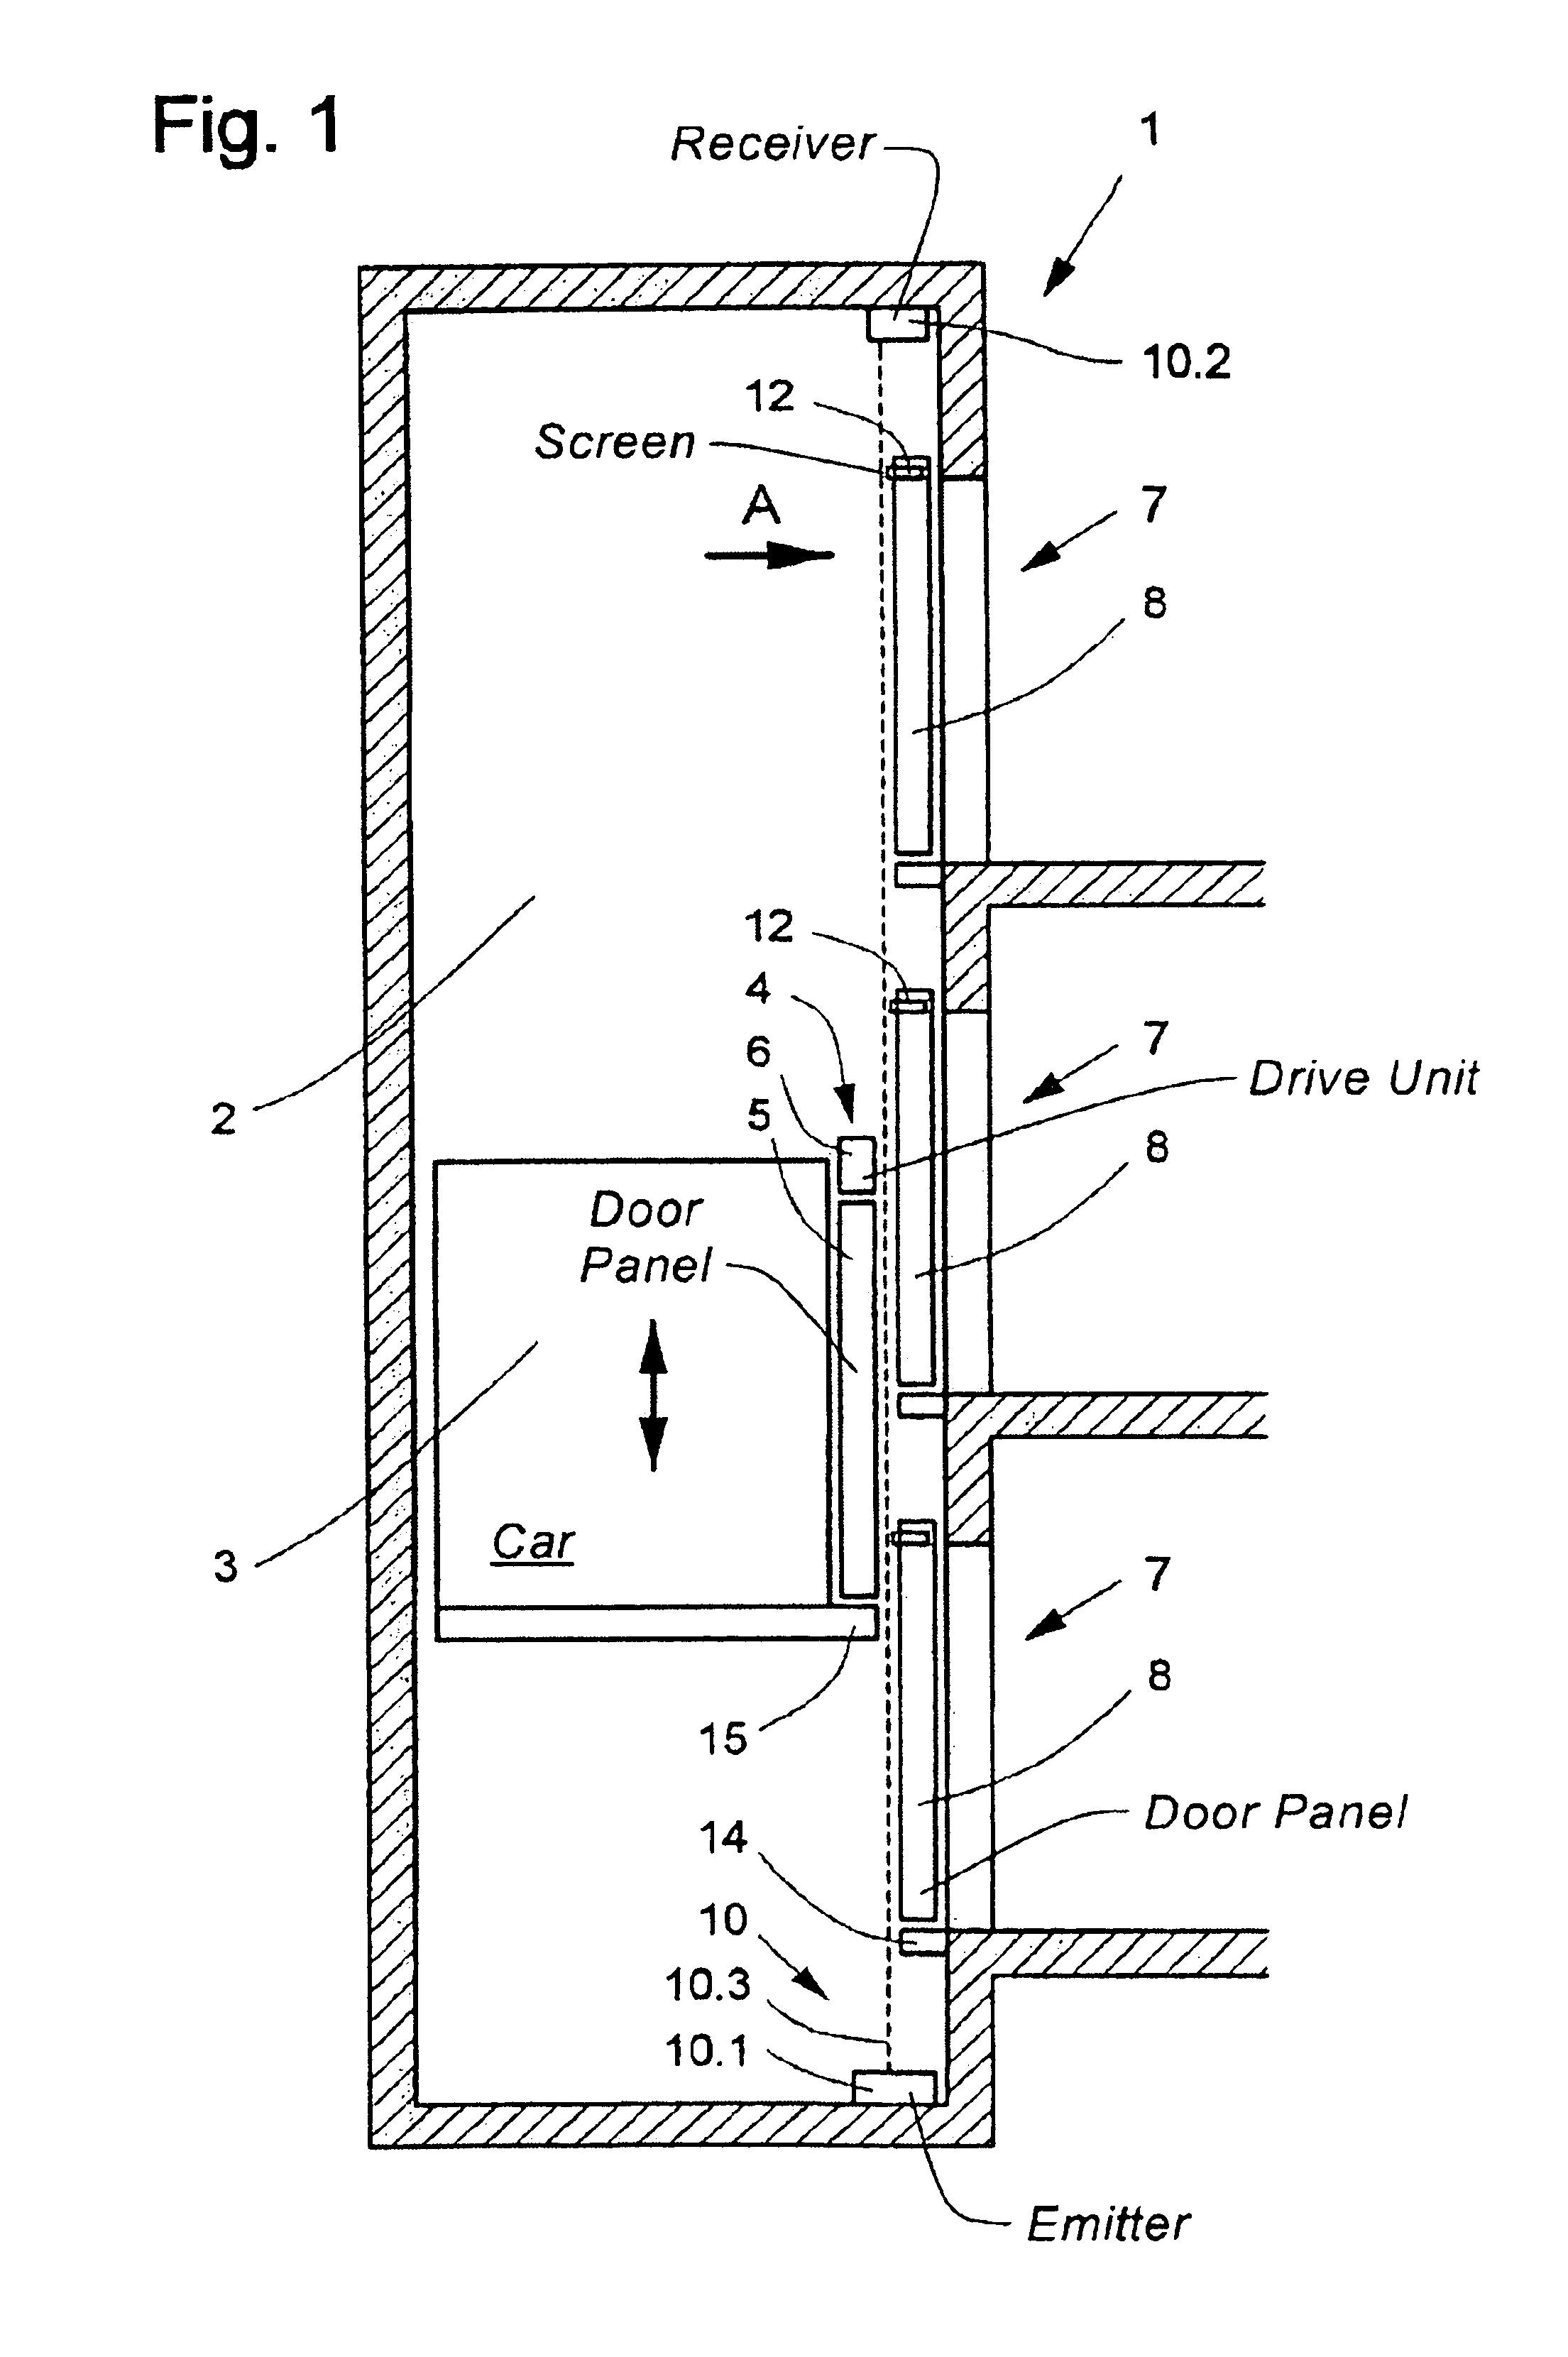 Method of contactlessly monitoring elevator shaft doors